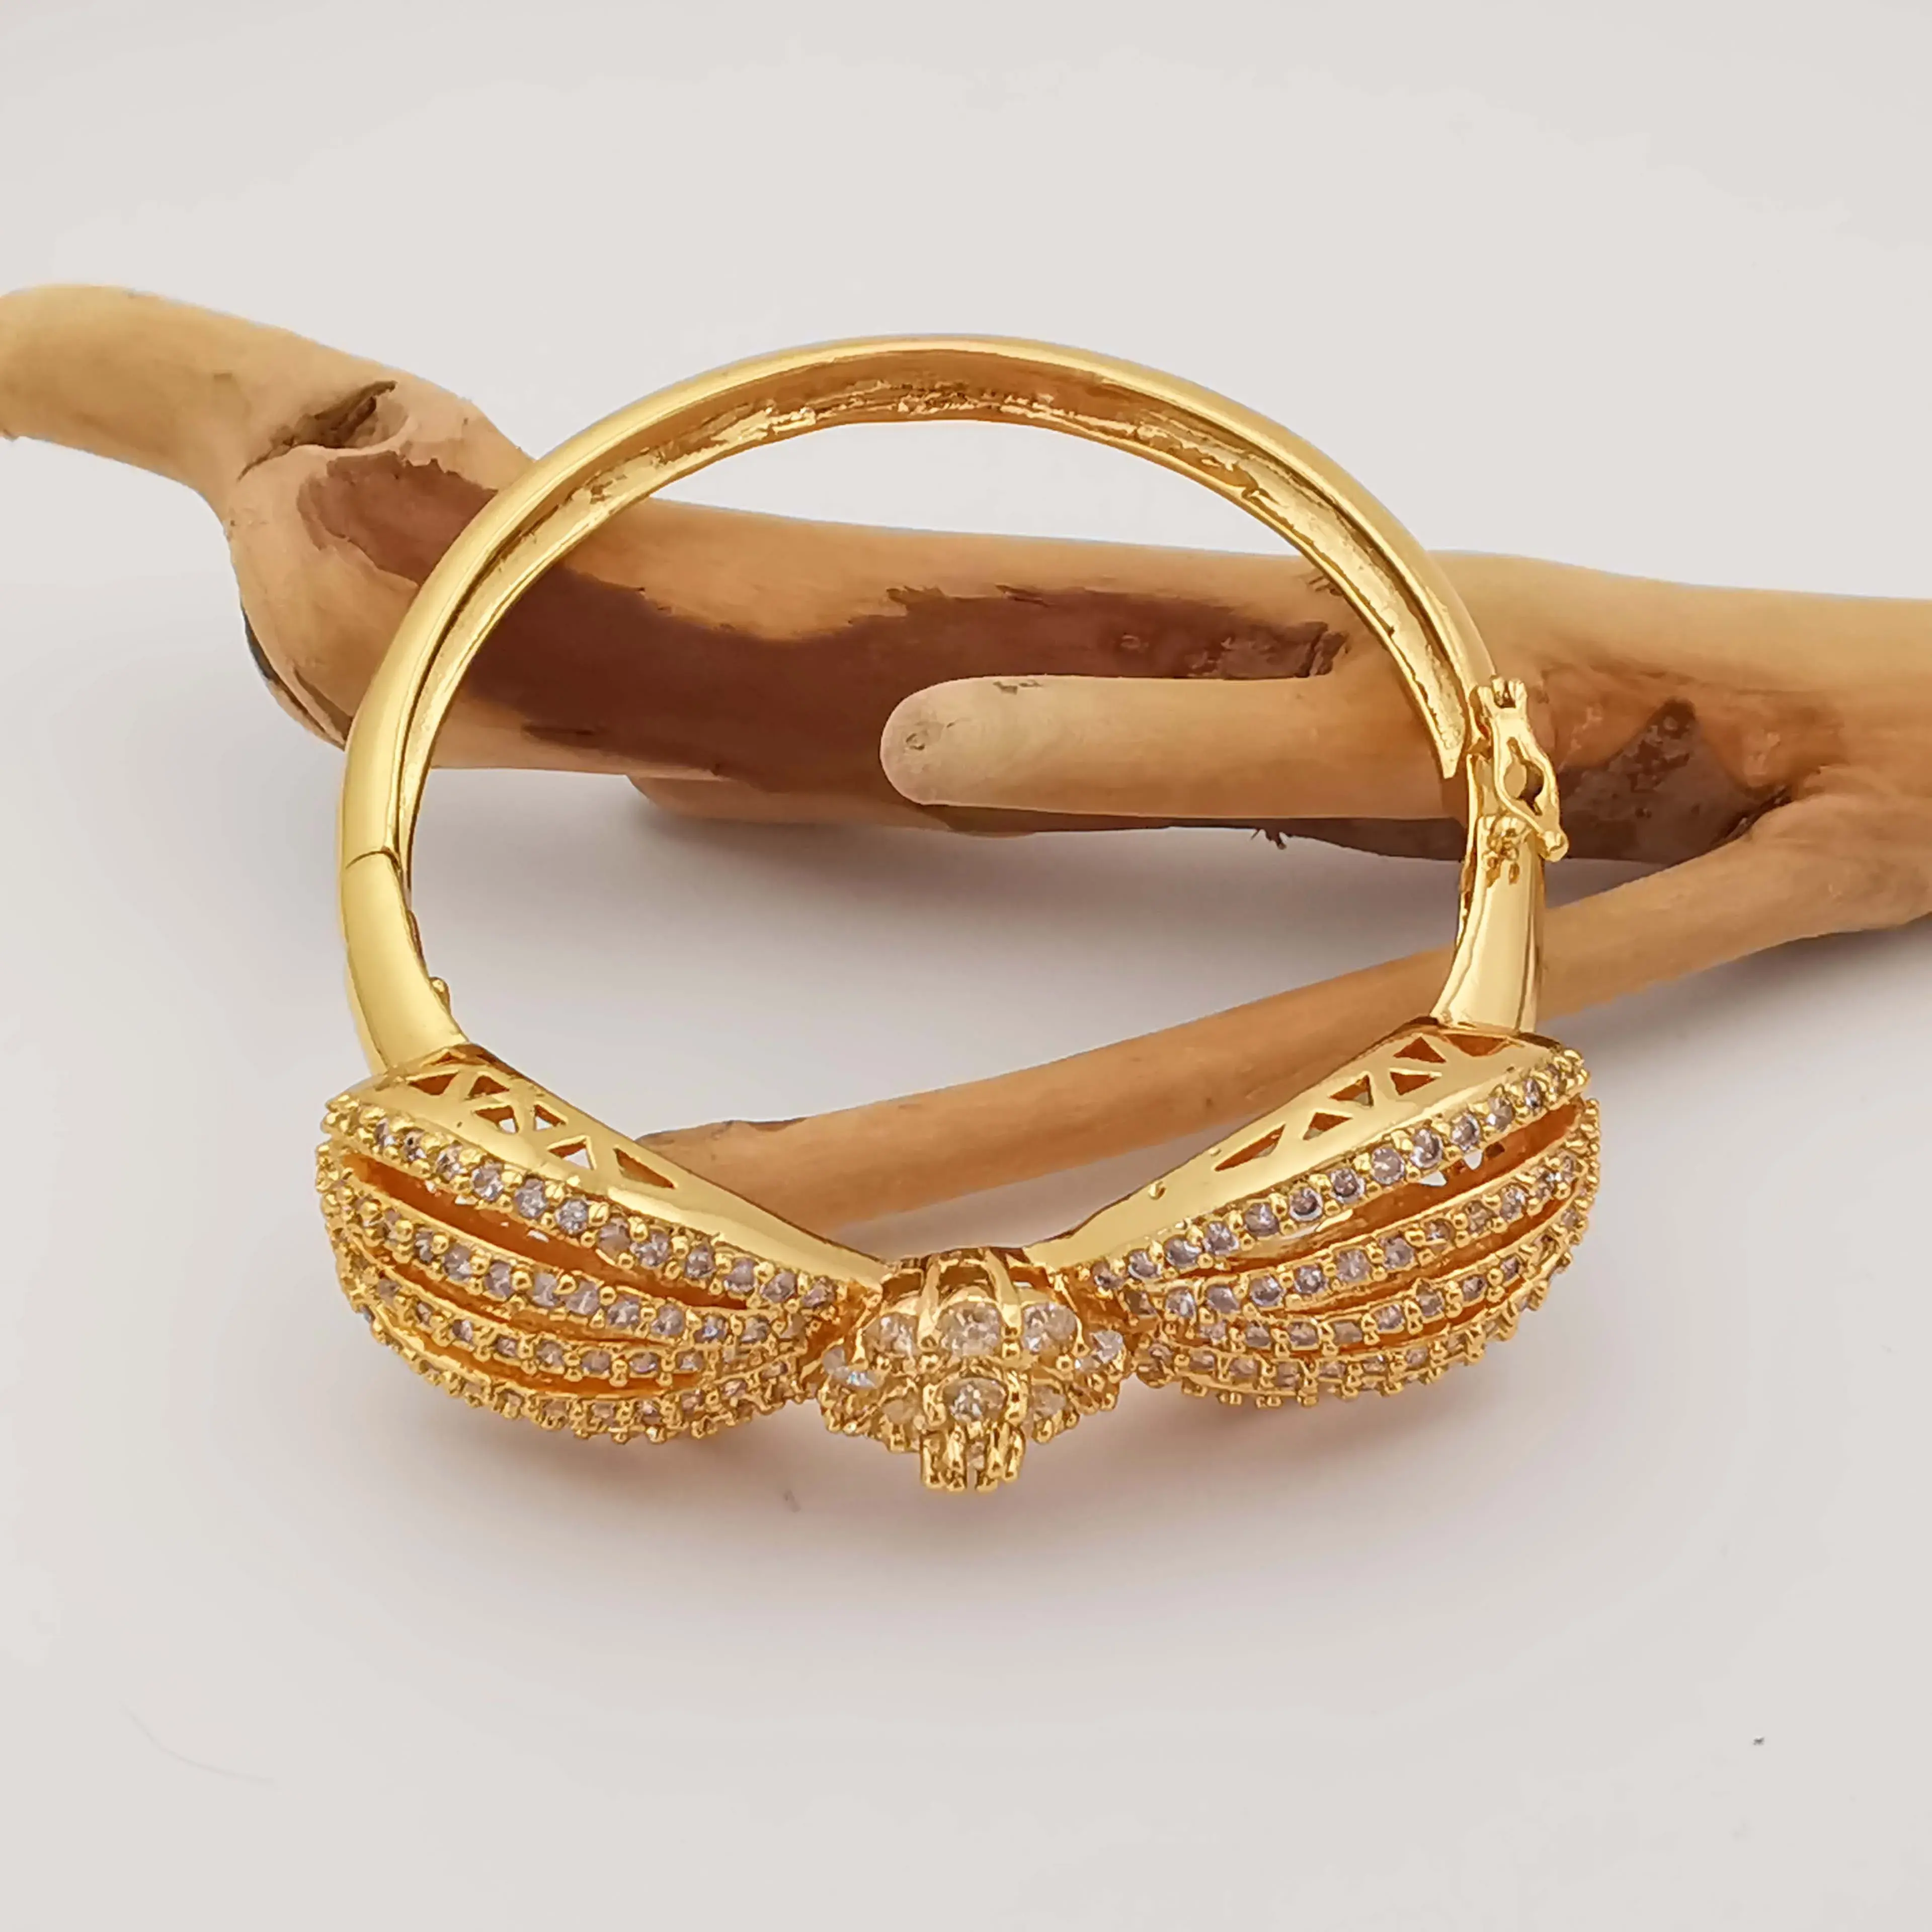 Pulseira elástica de resina banhada a ouro 18K para casamento indiano, joia da moda feminina, ideal para roupas de casamento, Ma, novidade em vendas